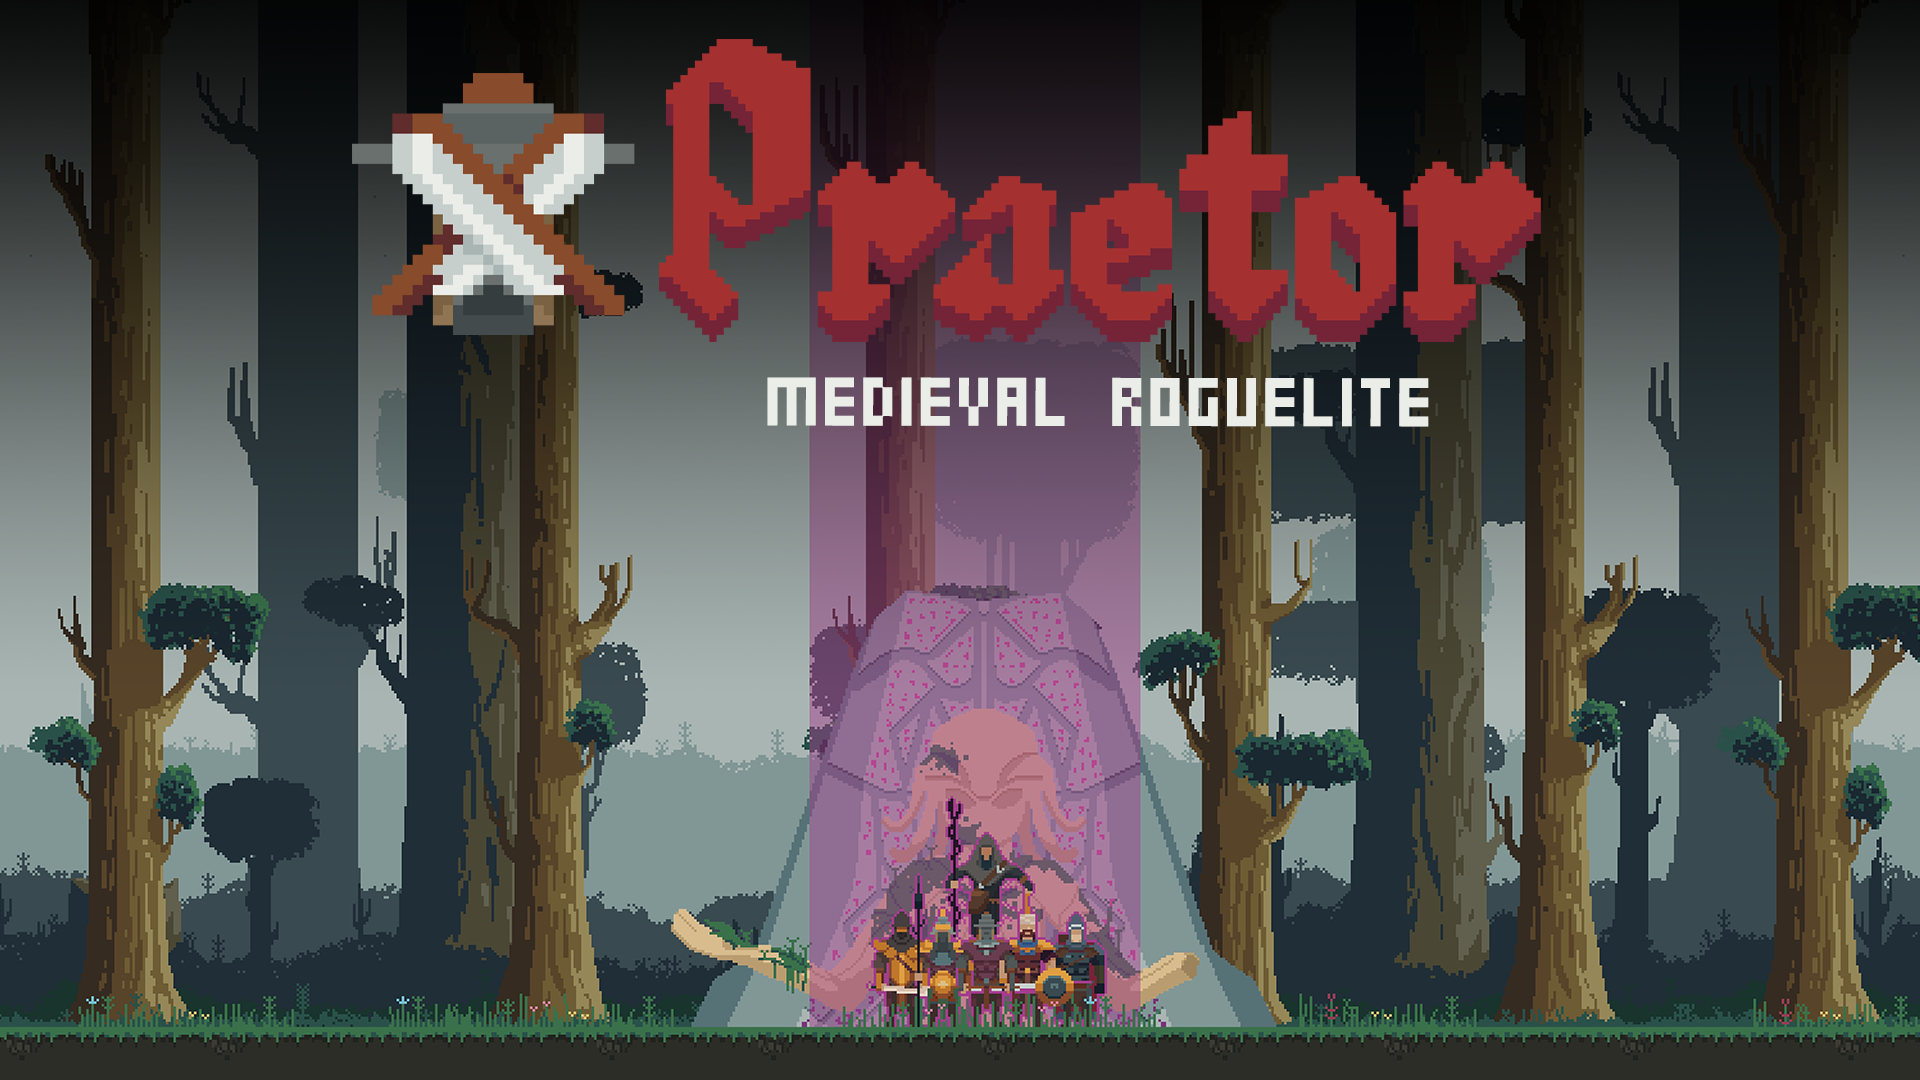 Screenshot 1 of Pretor: Roguelita medieval 0.3.7 Early Access